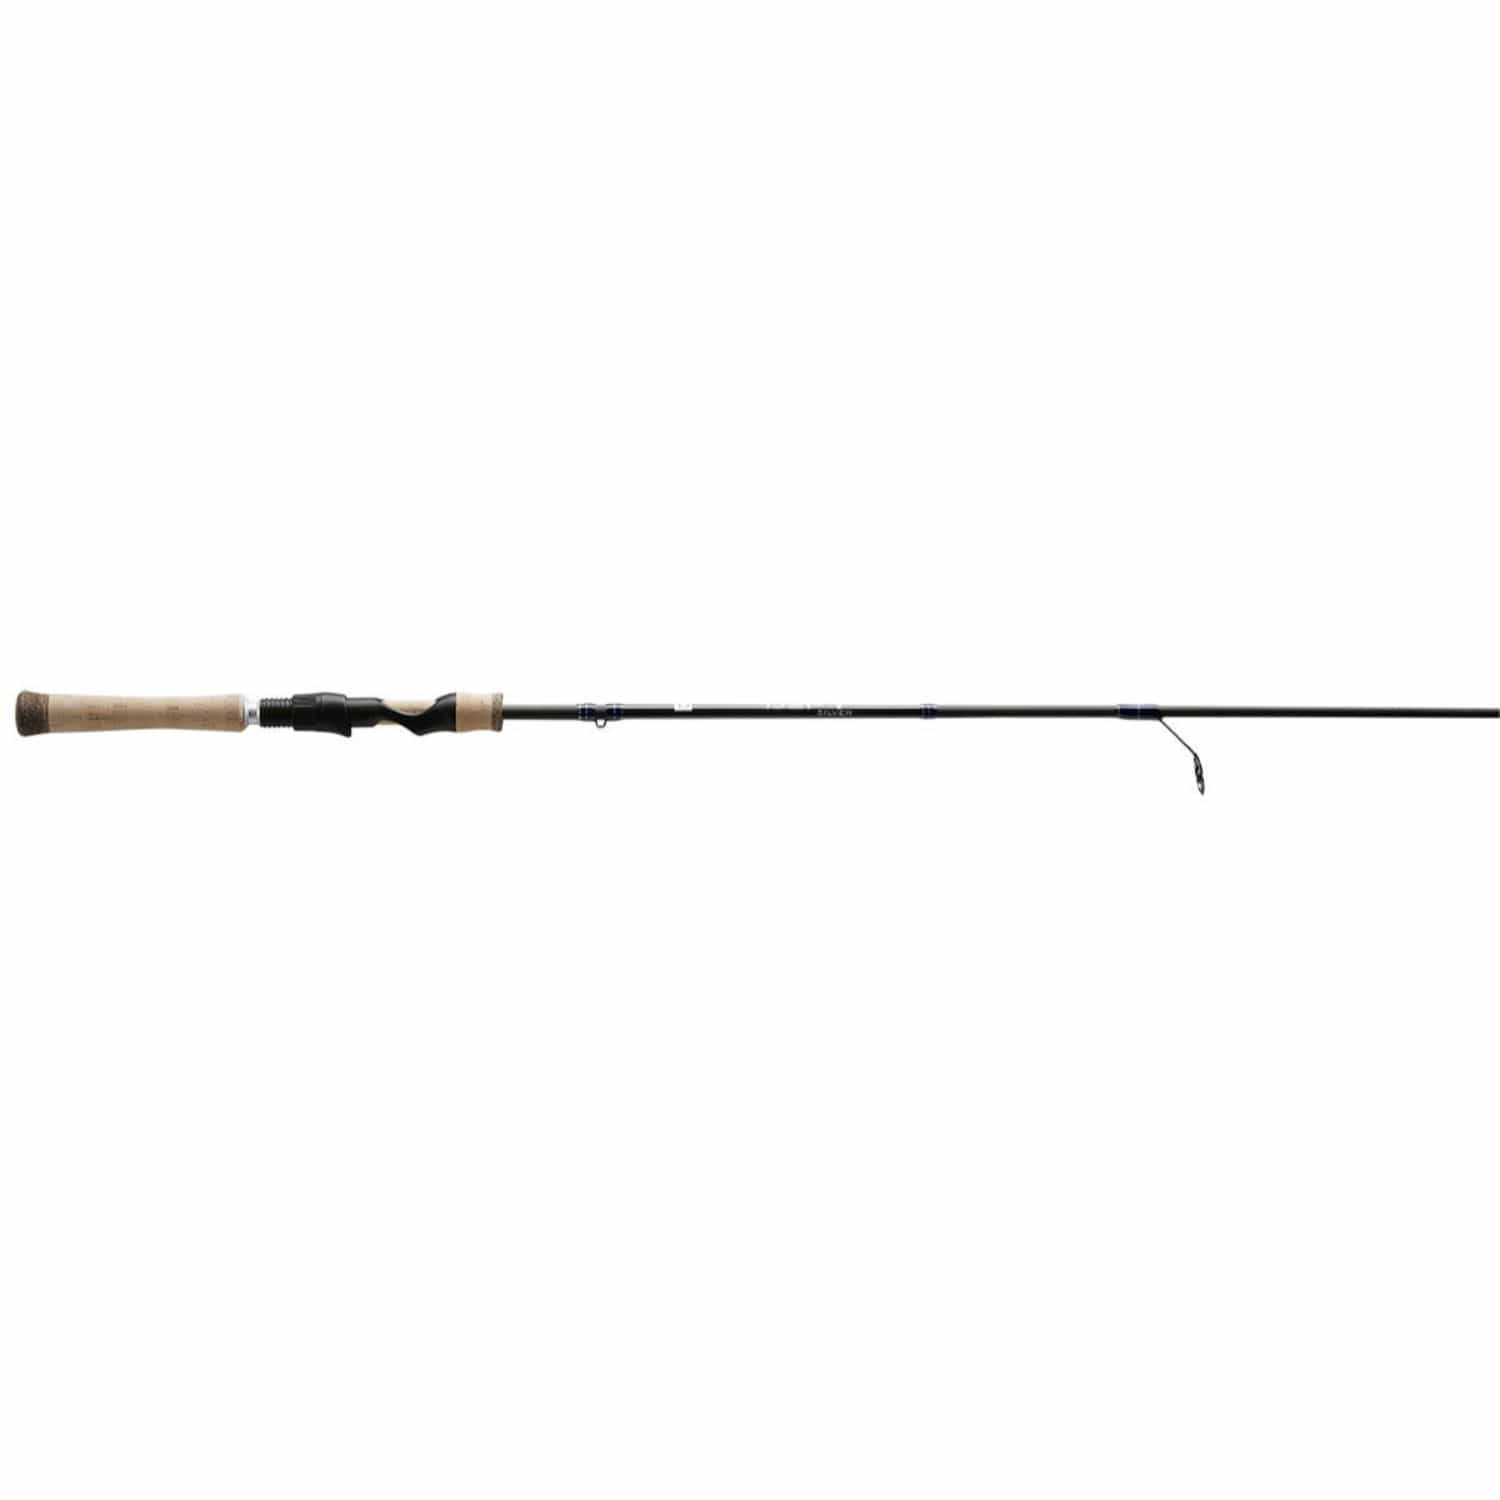 13 Fishing Fishing : Rods 13 Fishing Defy Silver 7 ft L Spinning Rod 2pc